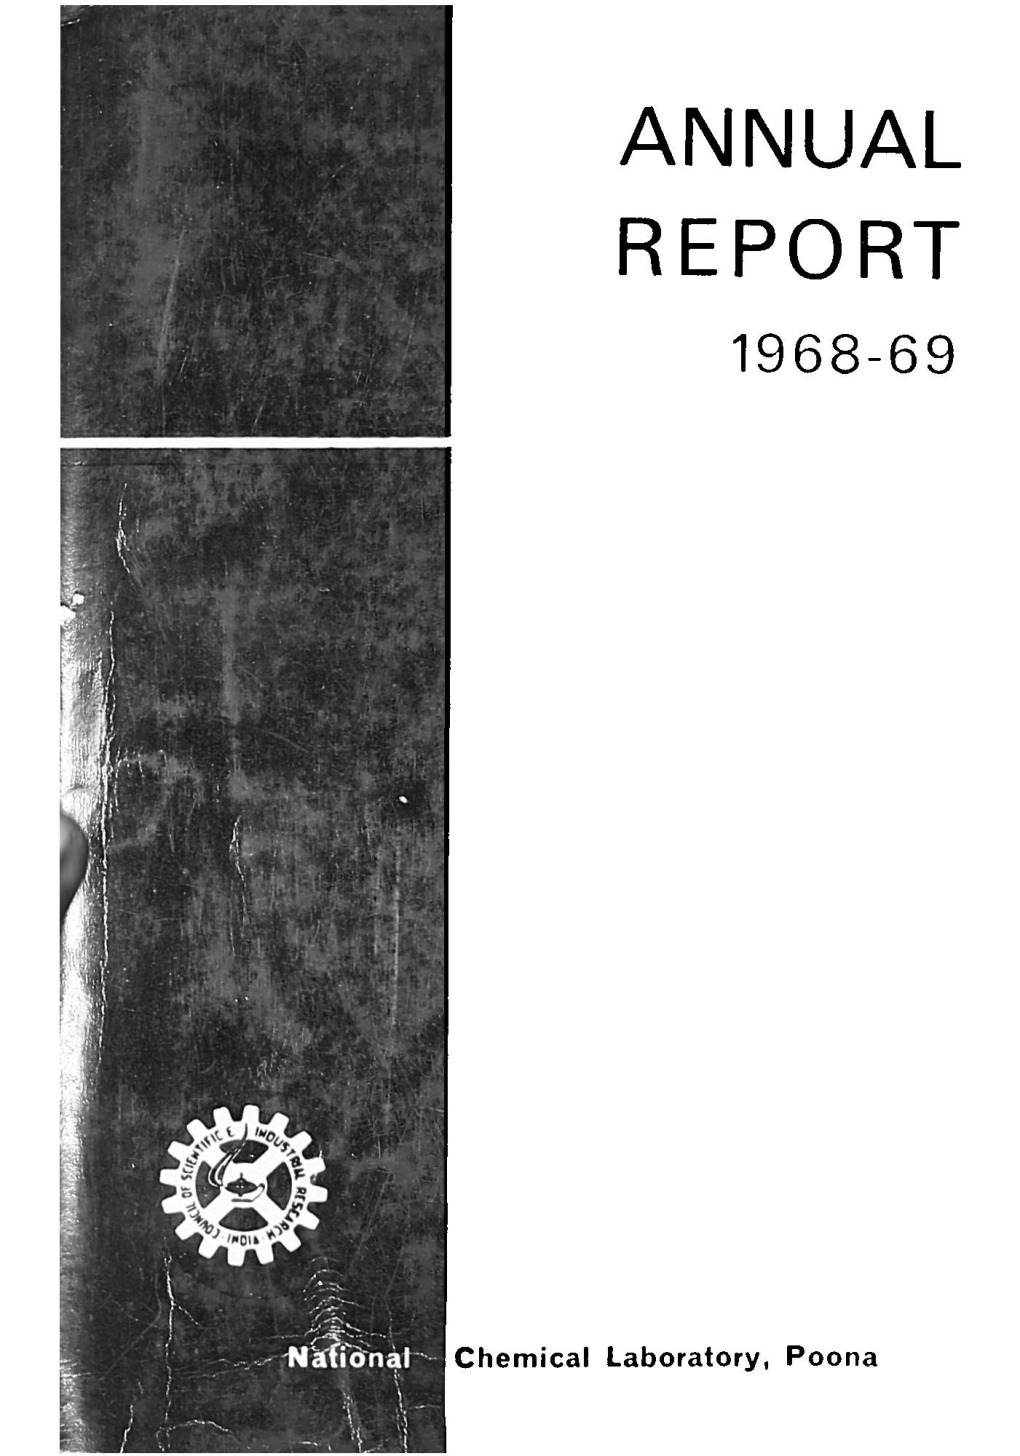 Annual Report 1968-69